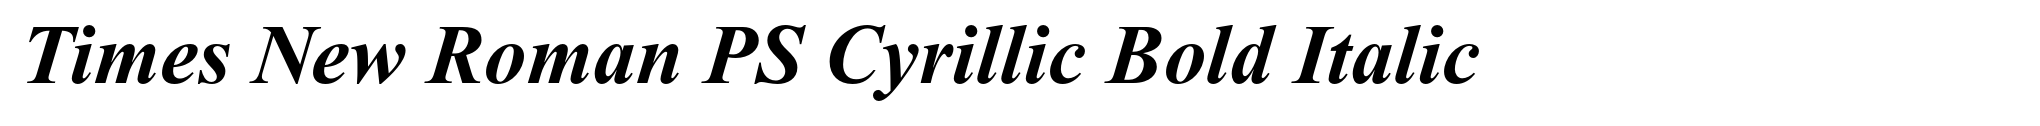 Times New Roman PS Cyrillic Bold Italic image